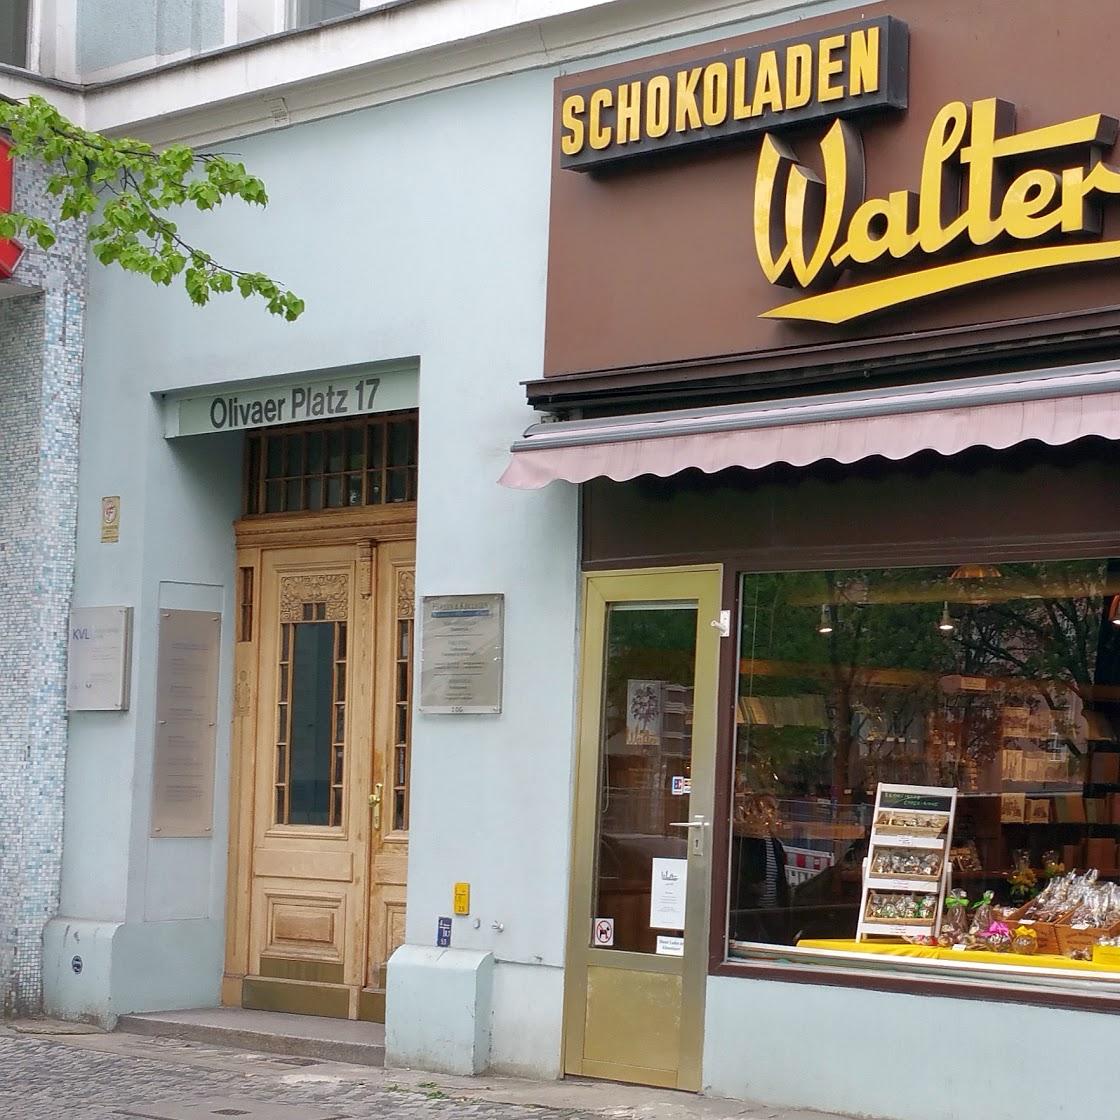 Restaurant "Walter Confiserie GmbH" in Berlin